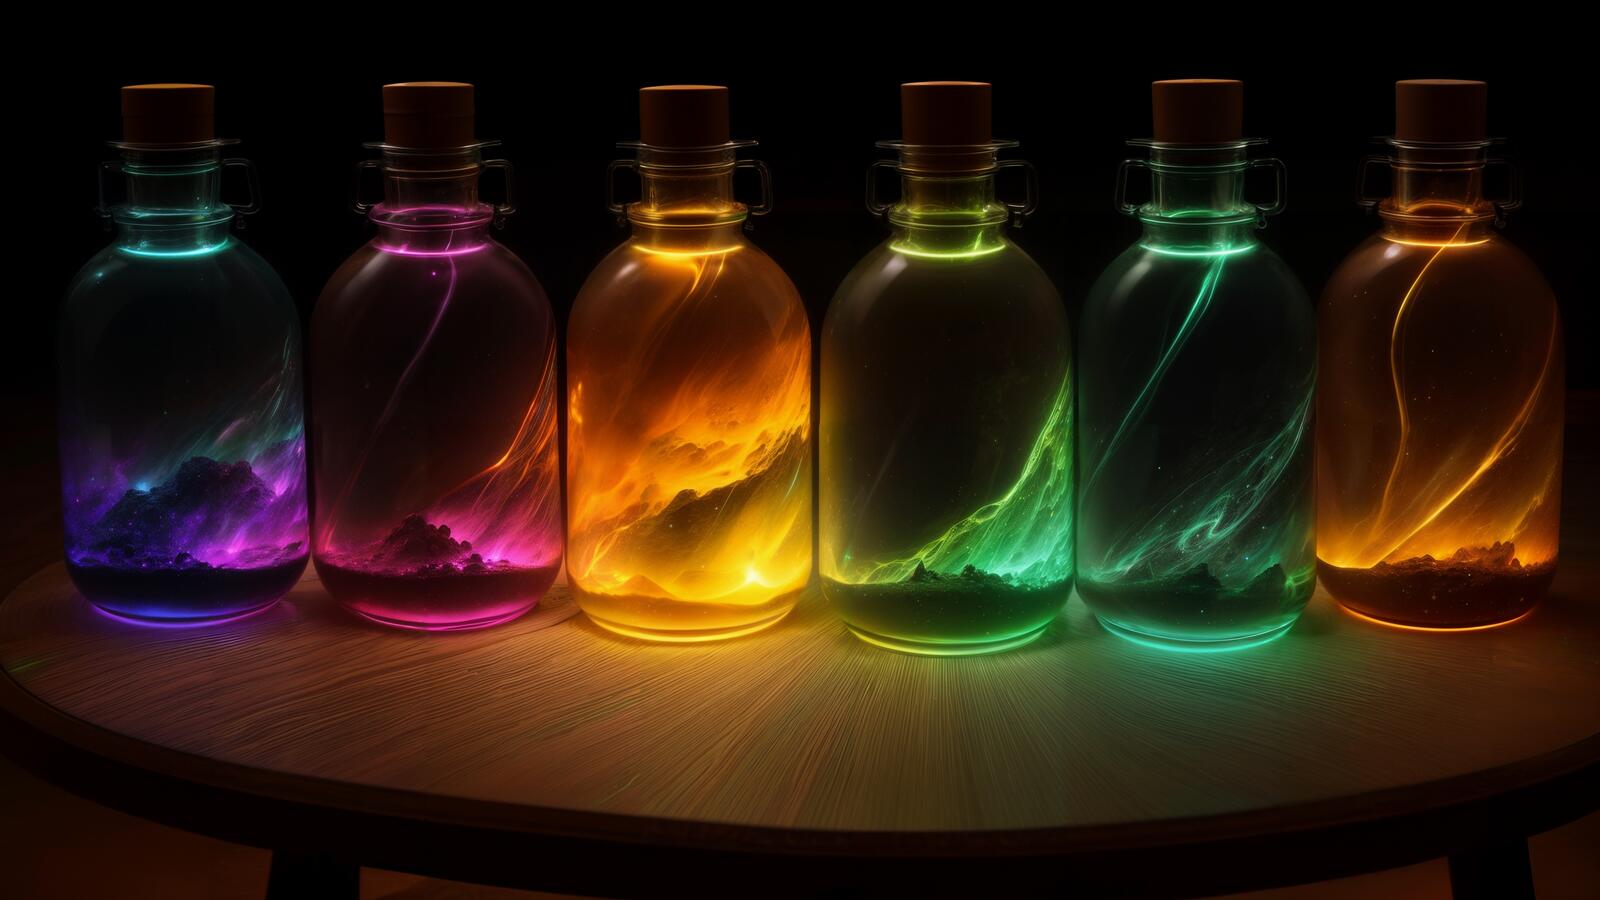 Free photo The magic bottles glow in the dark